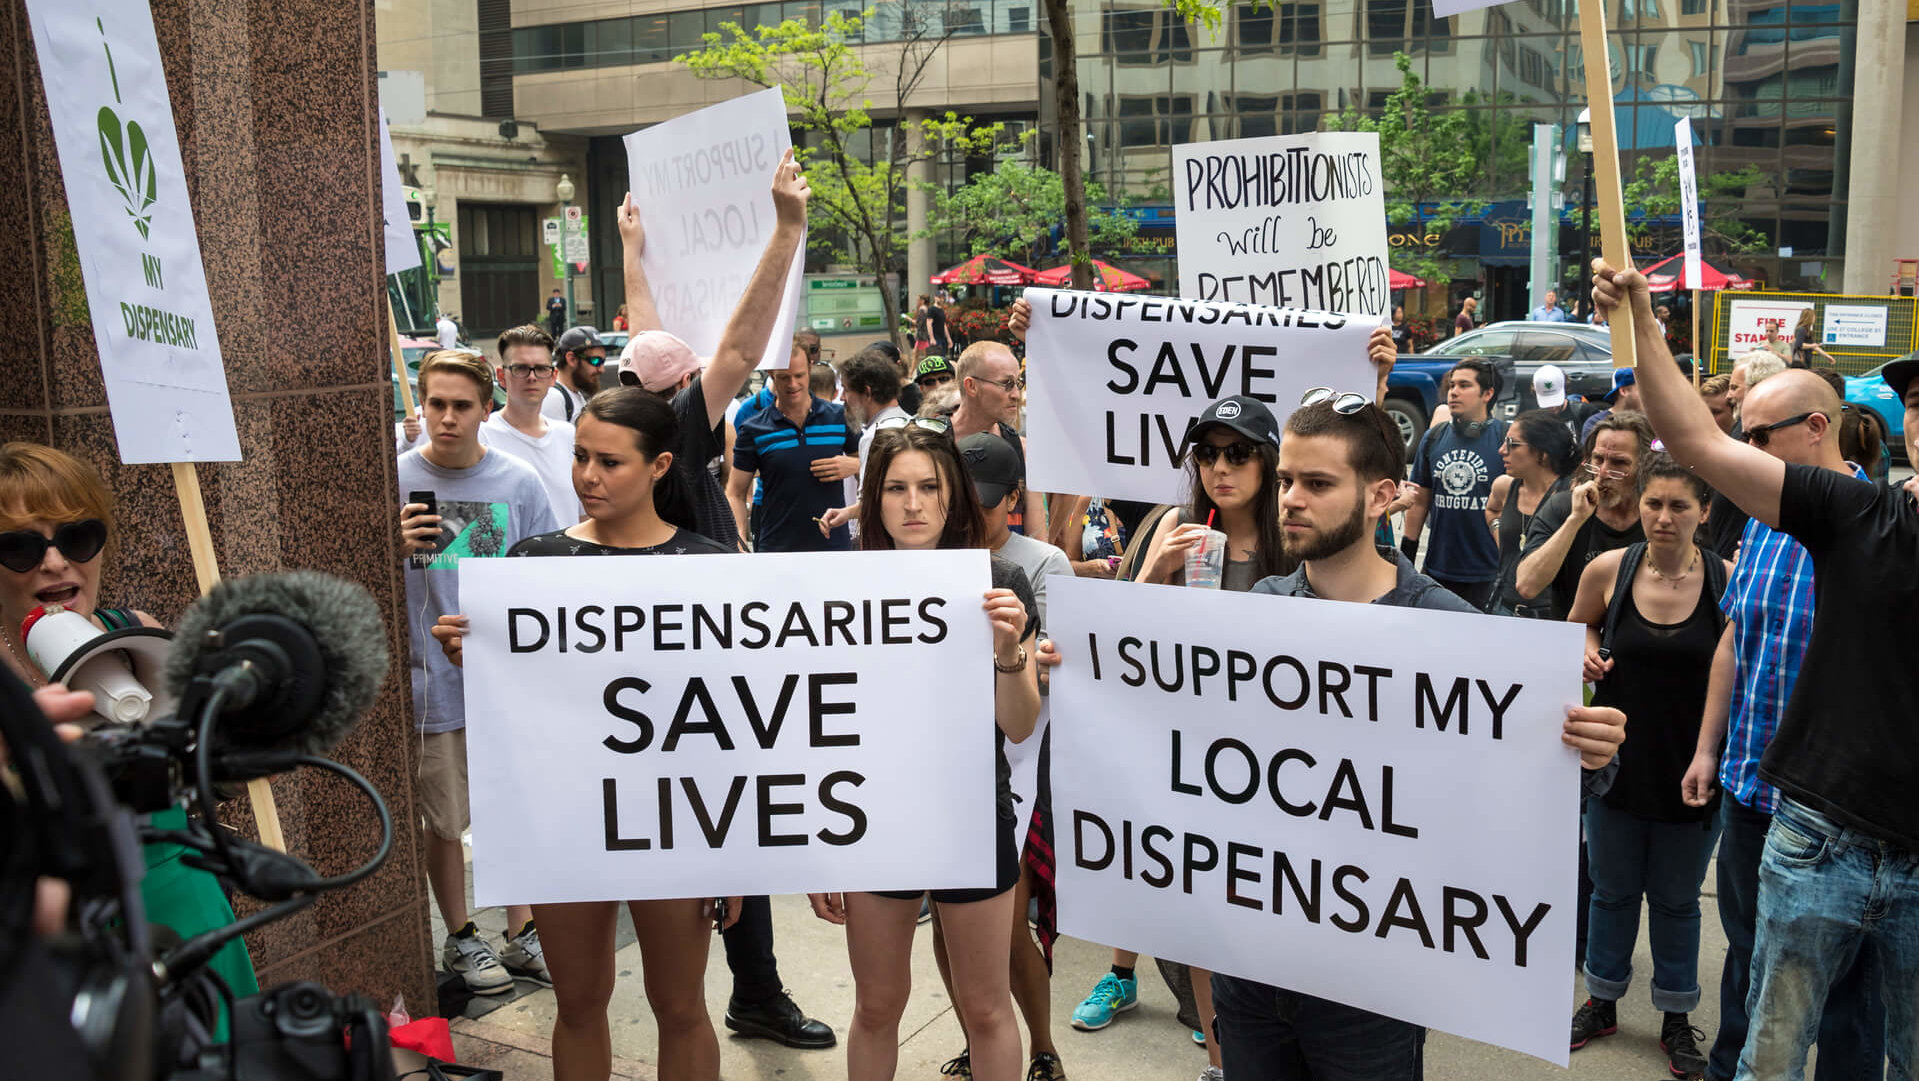 protestors want dispensaries